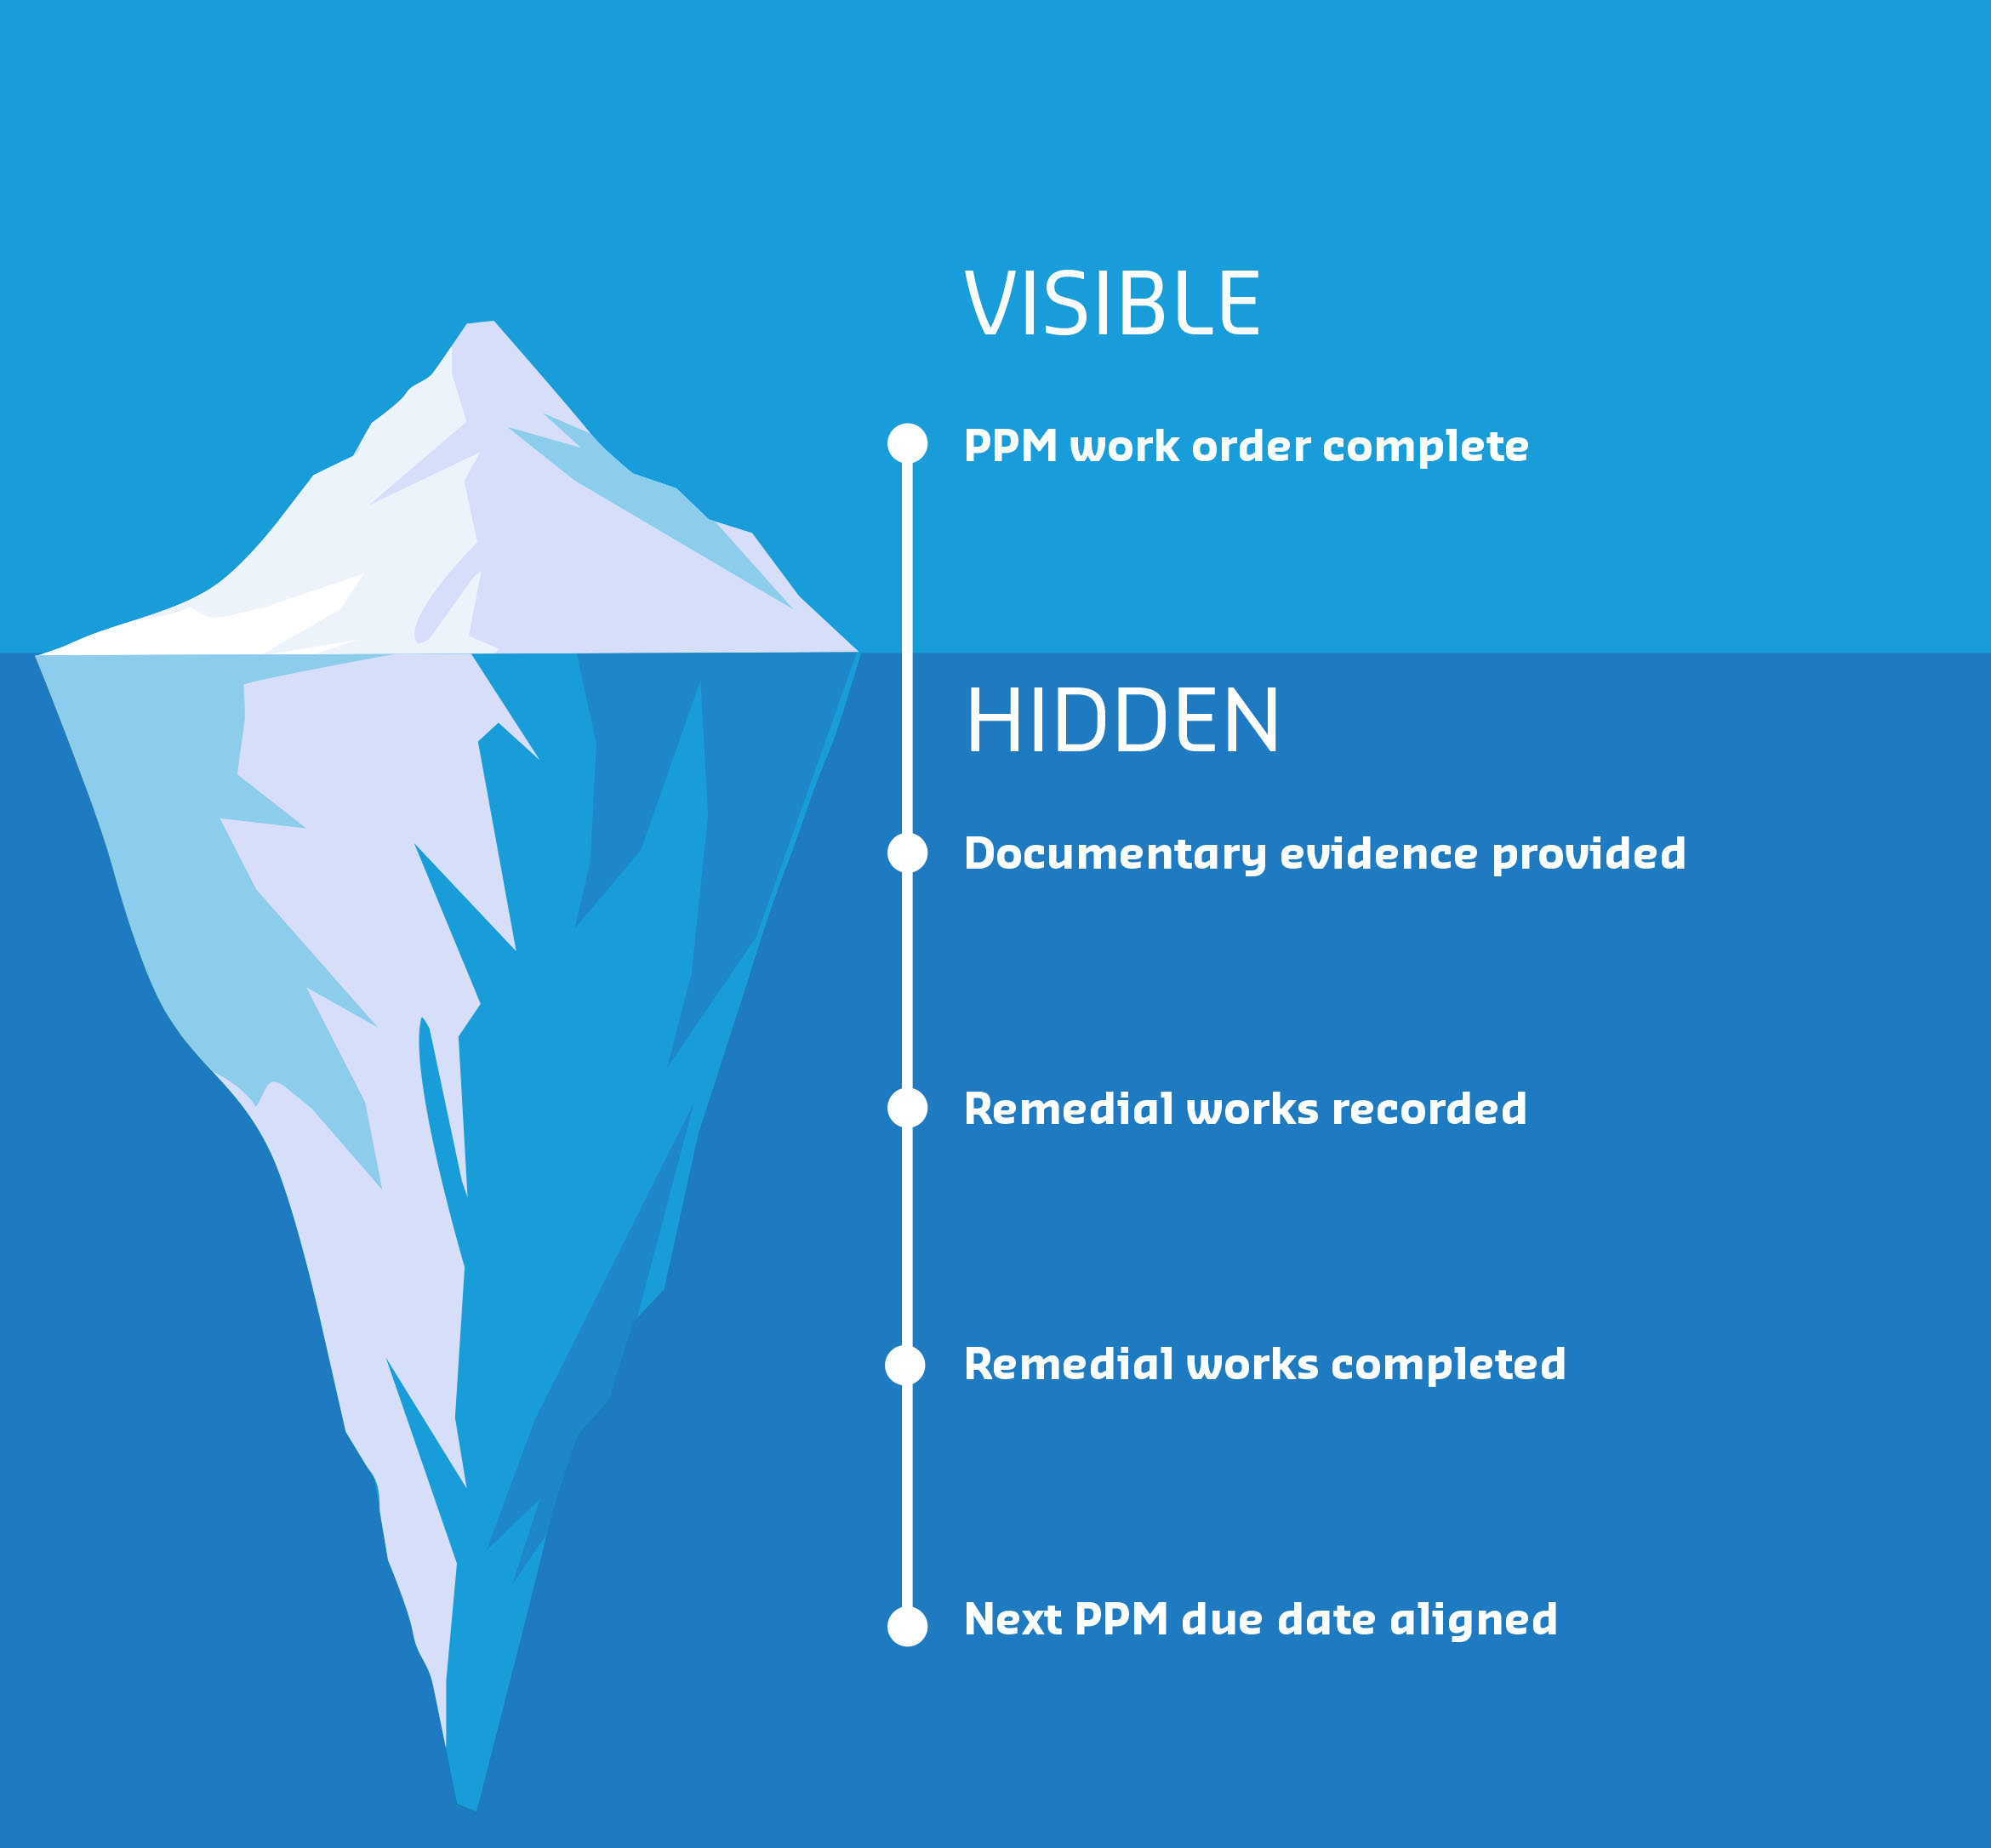 Compliance iceberg